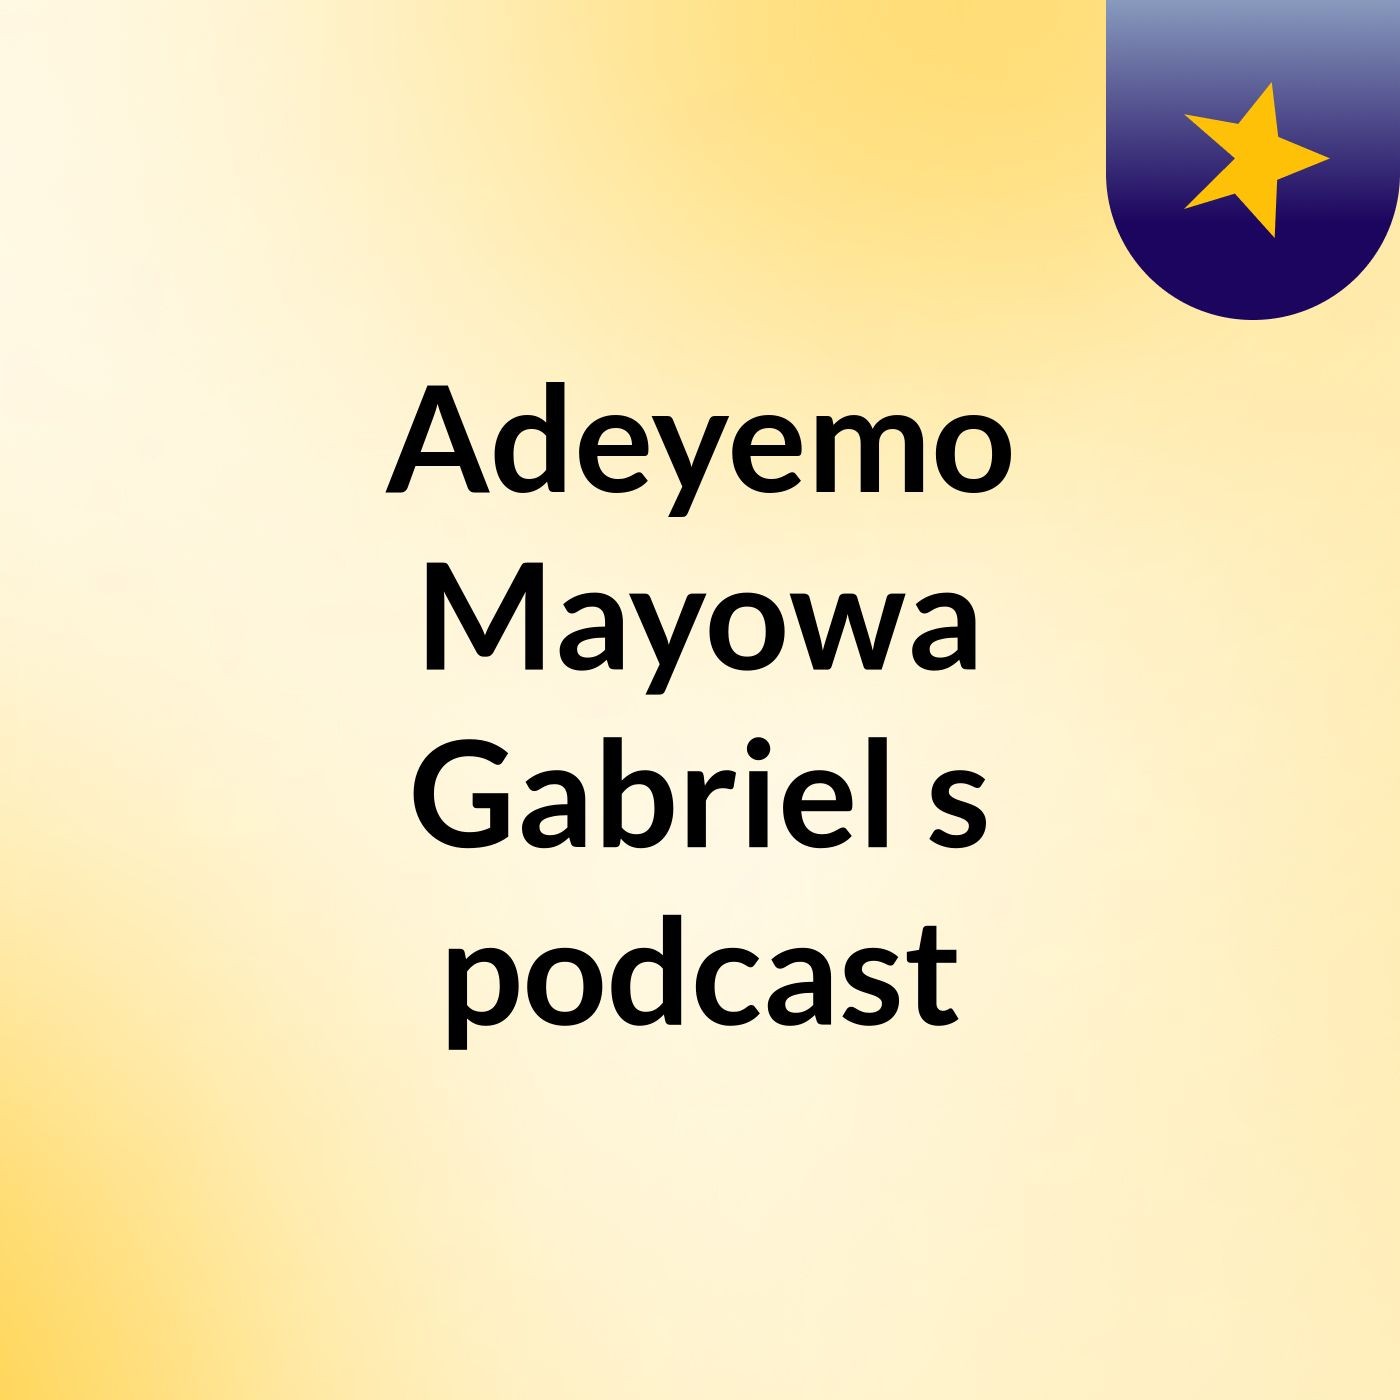 Episode 32 - Adeyemo Mayowa Gabriel's podcast